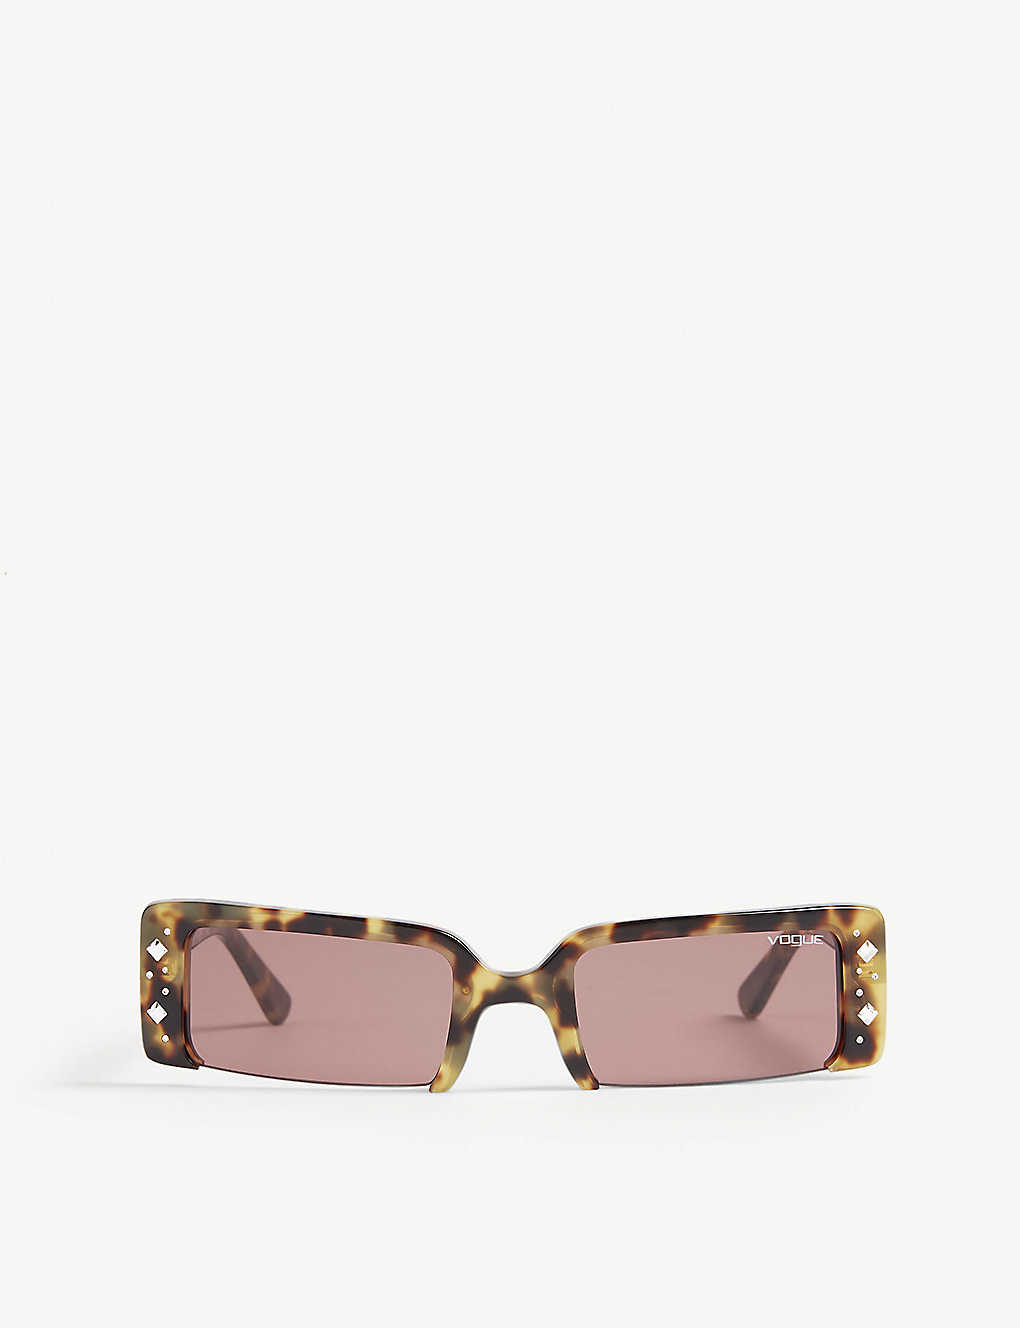 Vogue Gigi Hadid Vo5280 Rectangle-frame Sunglasses In Yellow